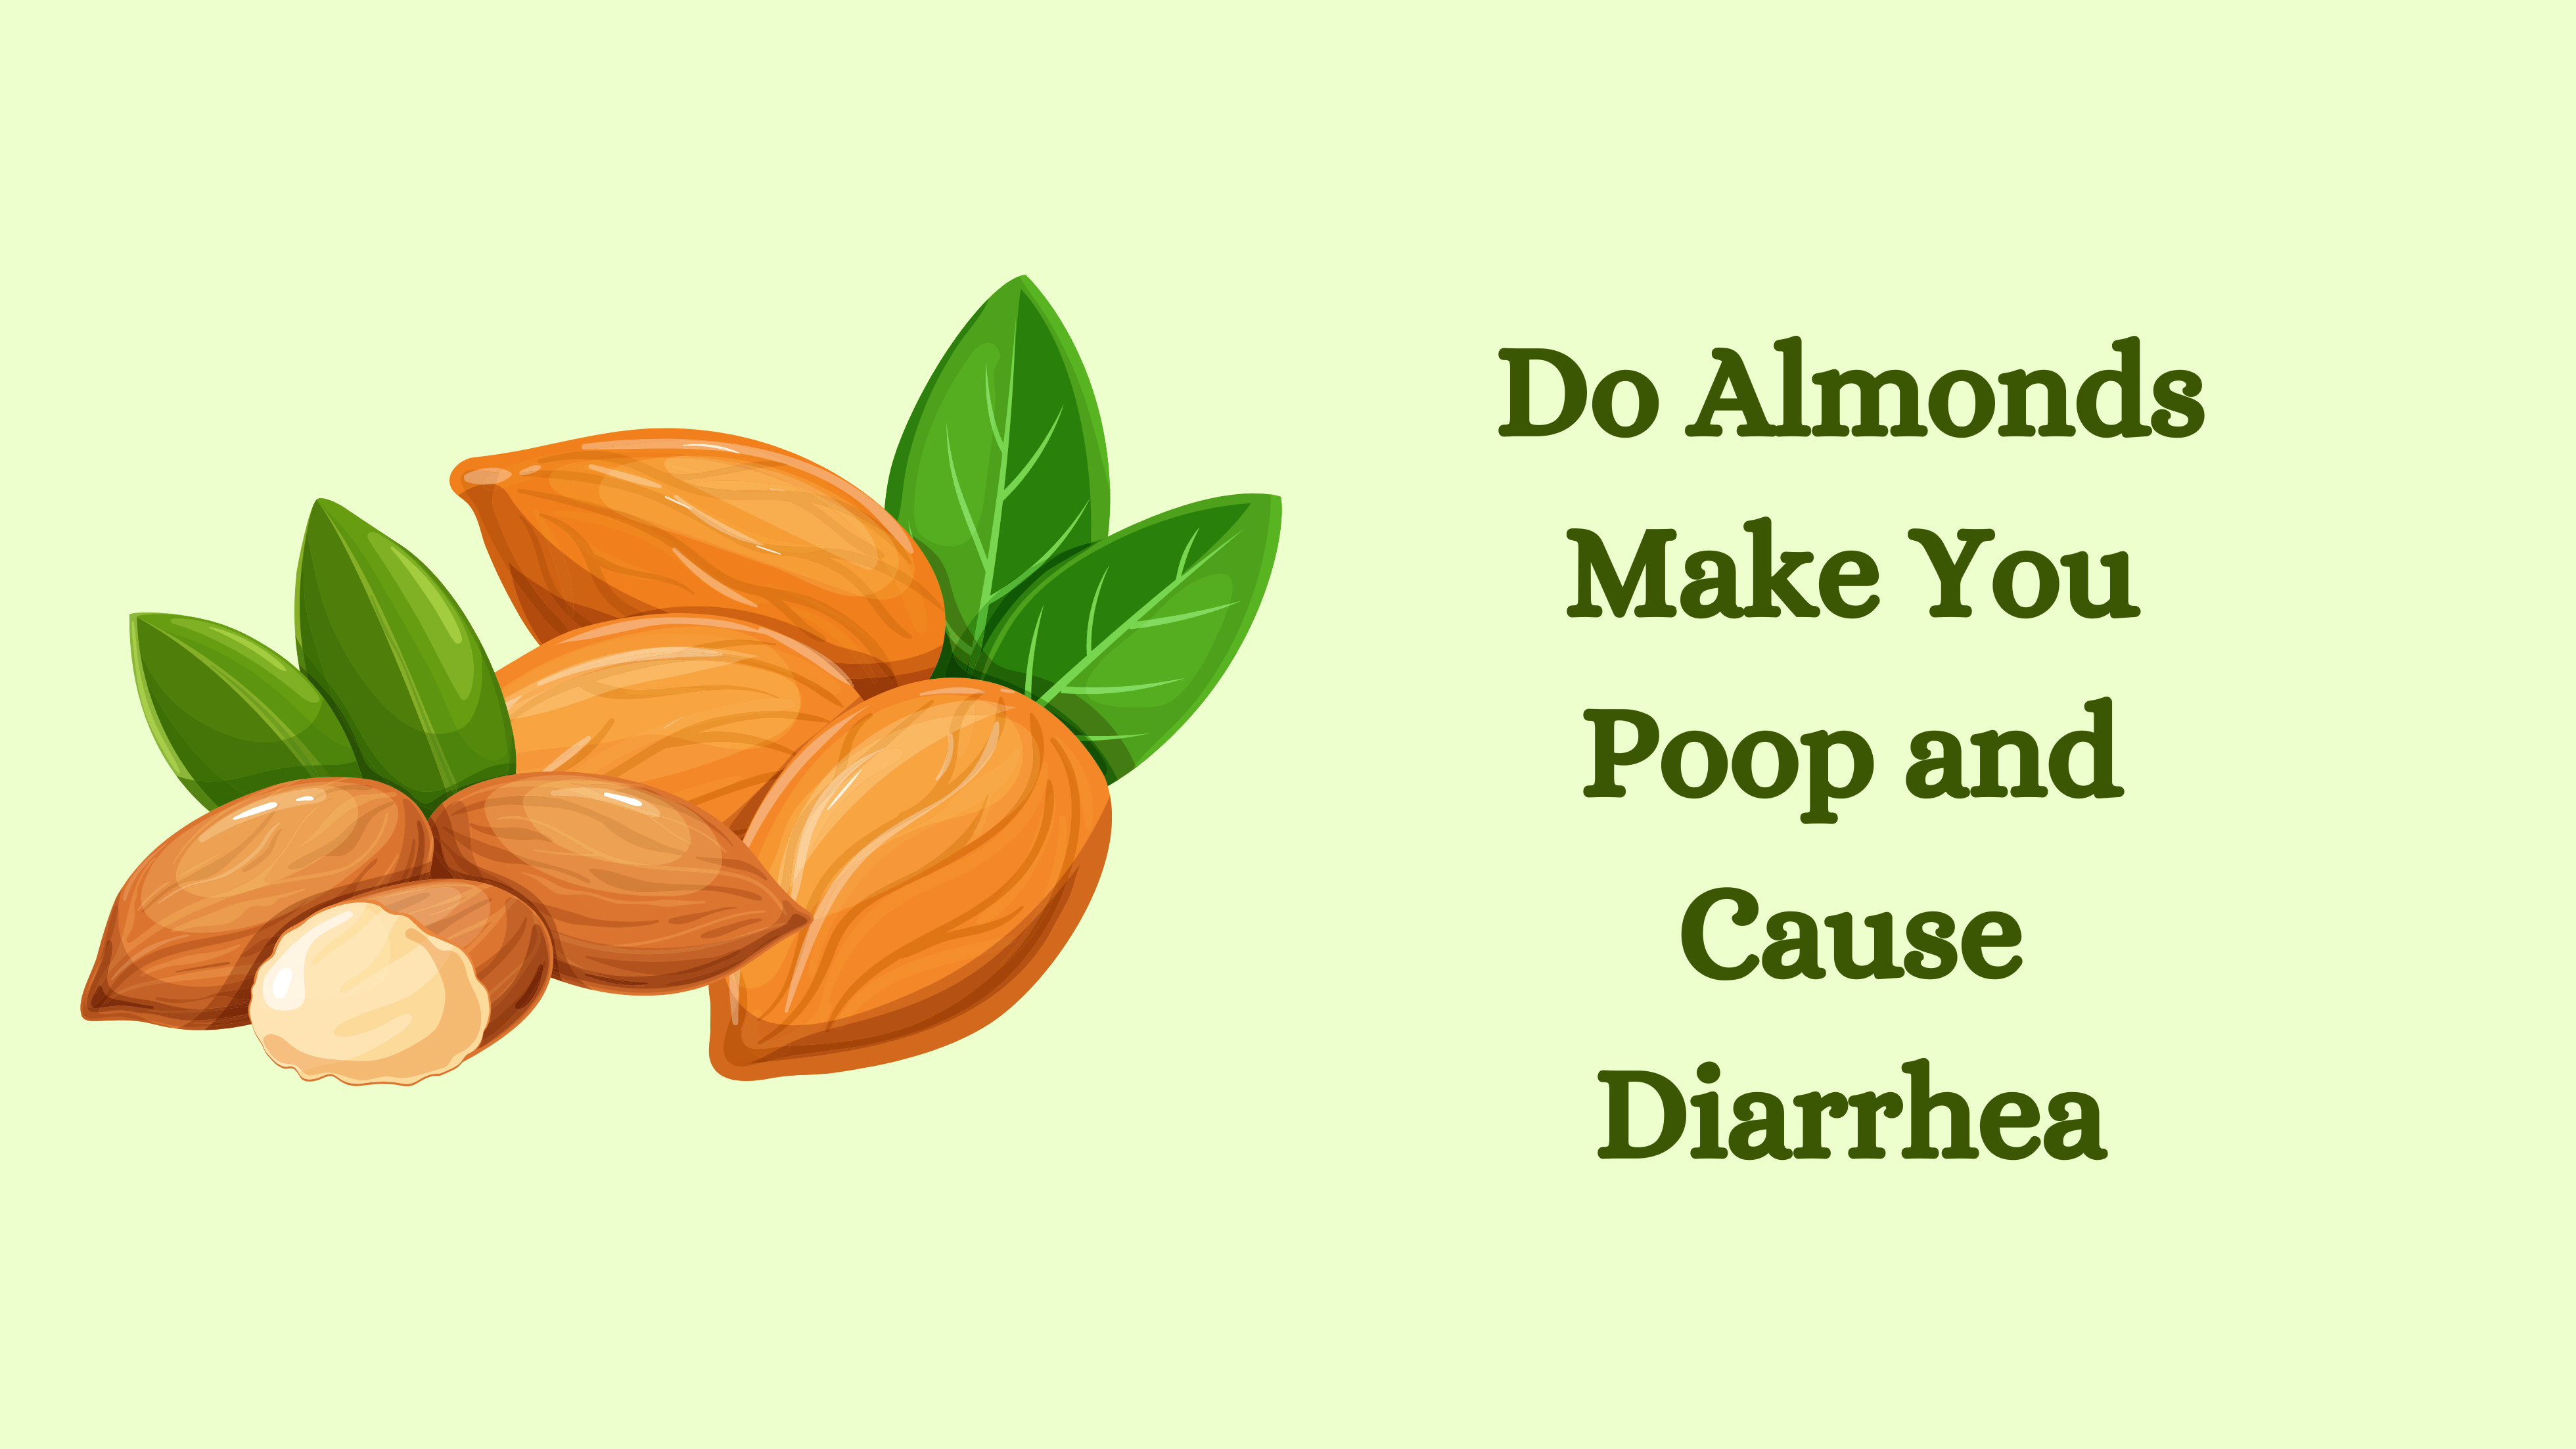 Do Almonds Make You Poop and Cause Diarrhea